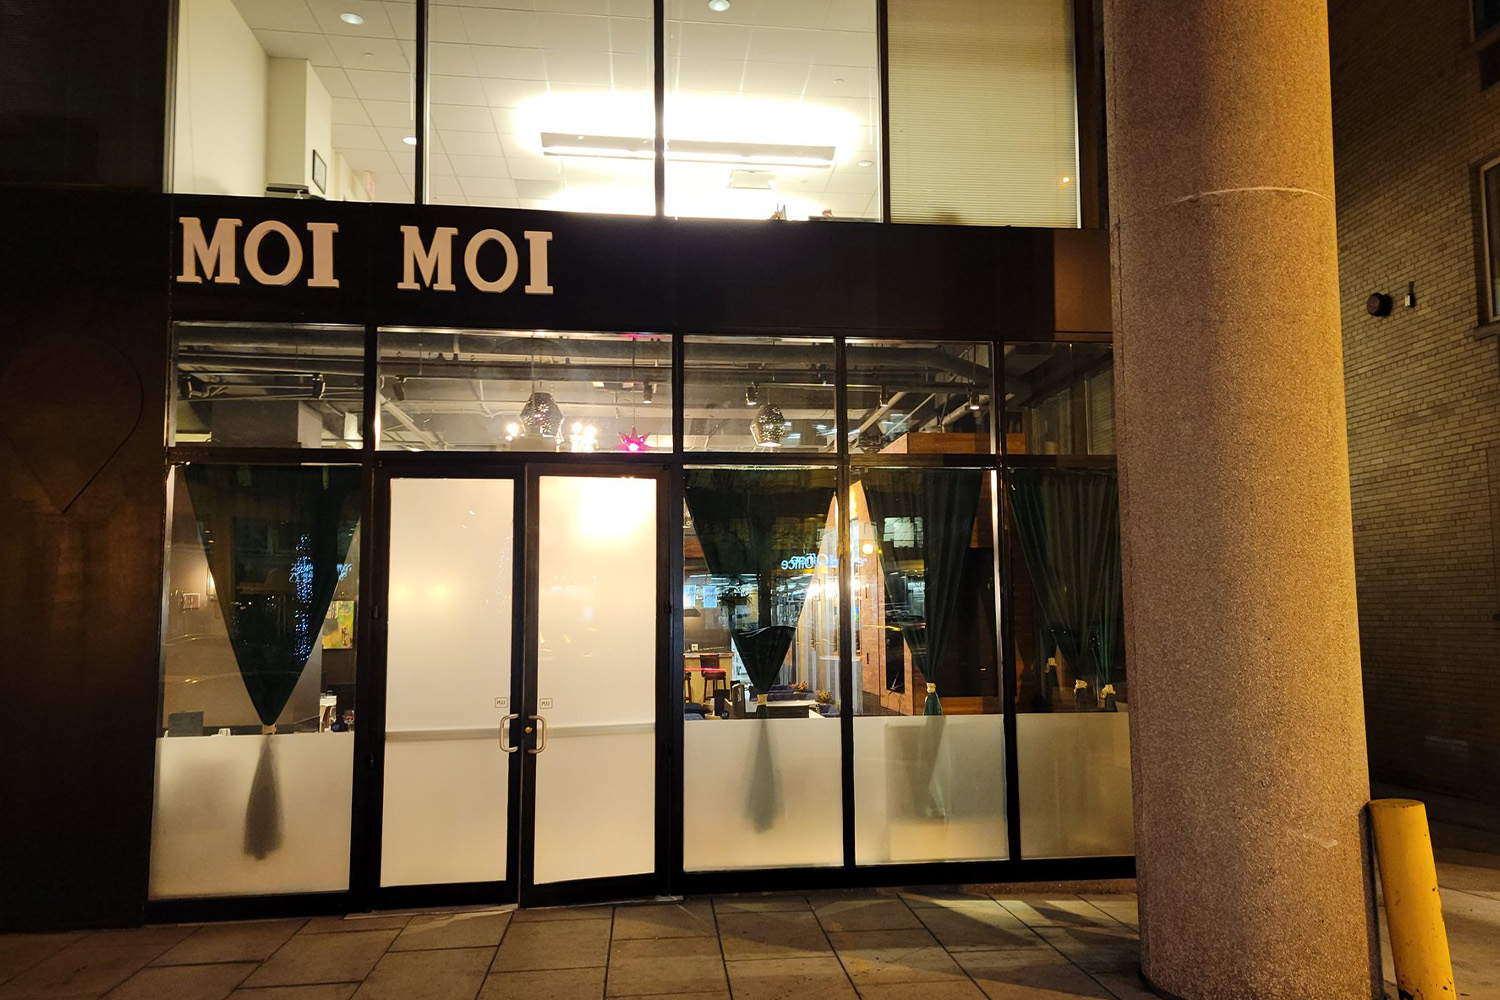 Exterior of Moi Moi restaurant